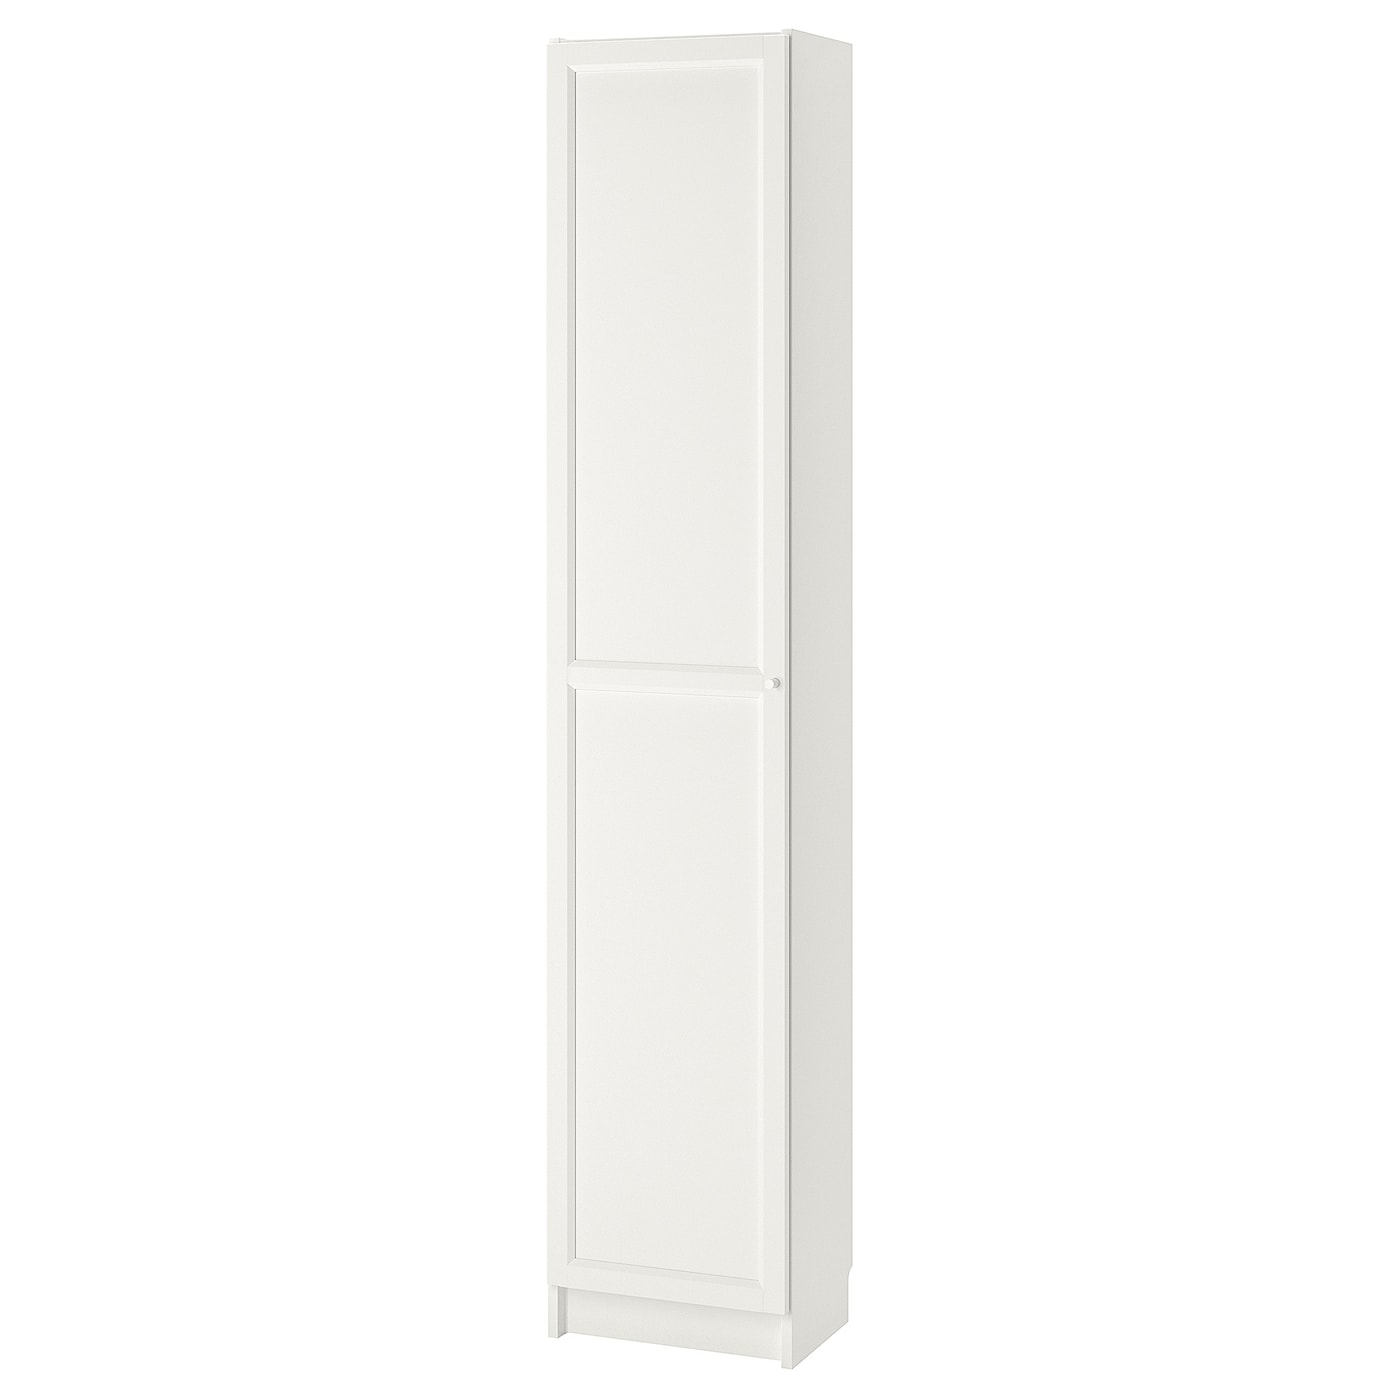 Книжный шкаф с дверью - BILLY/OXBERG IKEA/БИЛЛИ/ОКСБЕРГ ИКЕА, 42х40х202 см, белый